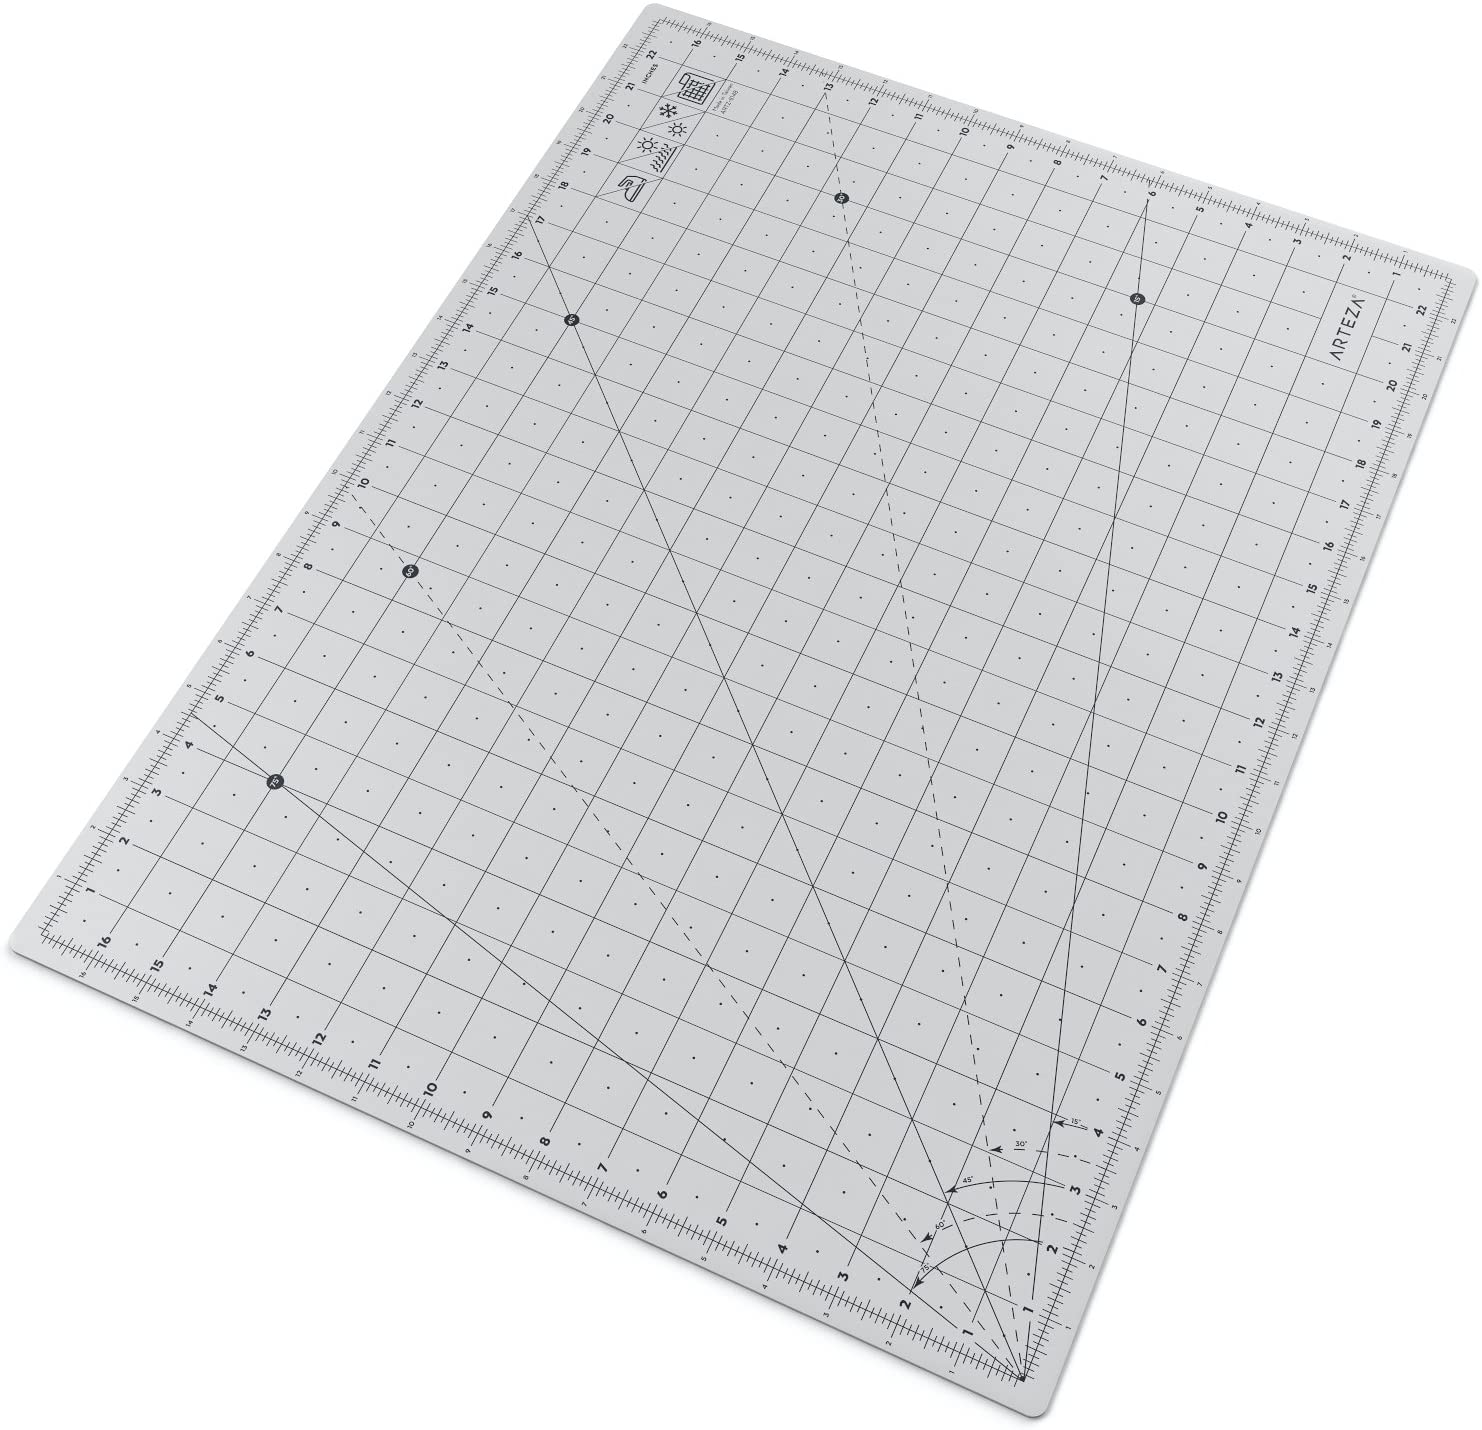 Arteza Self Healing Rotary Cutting Mat, 24x36 with Grid & Non Slip Surface